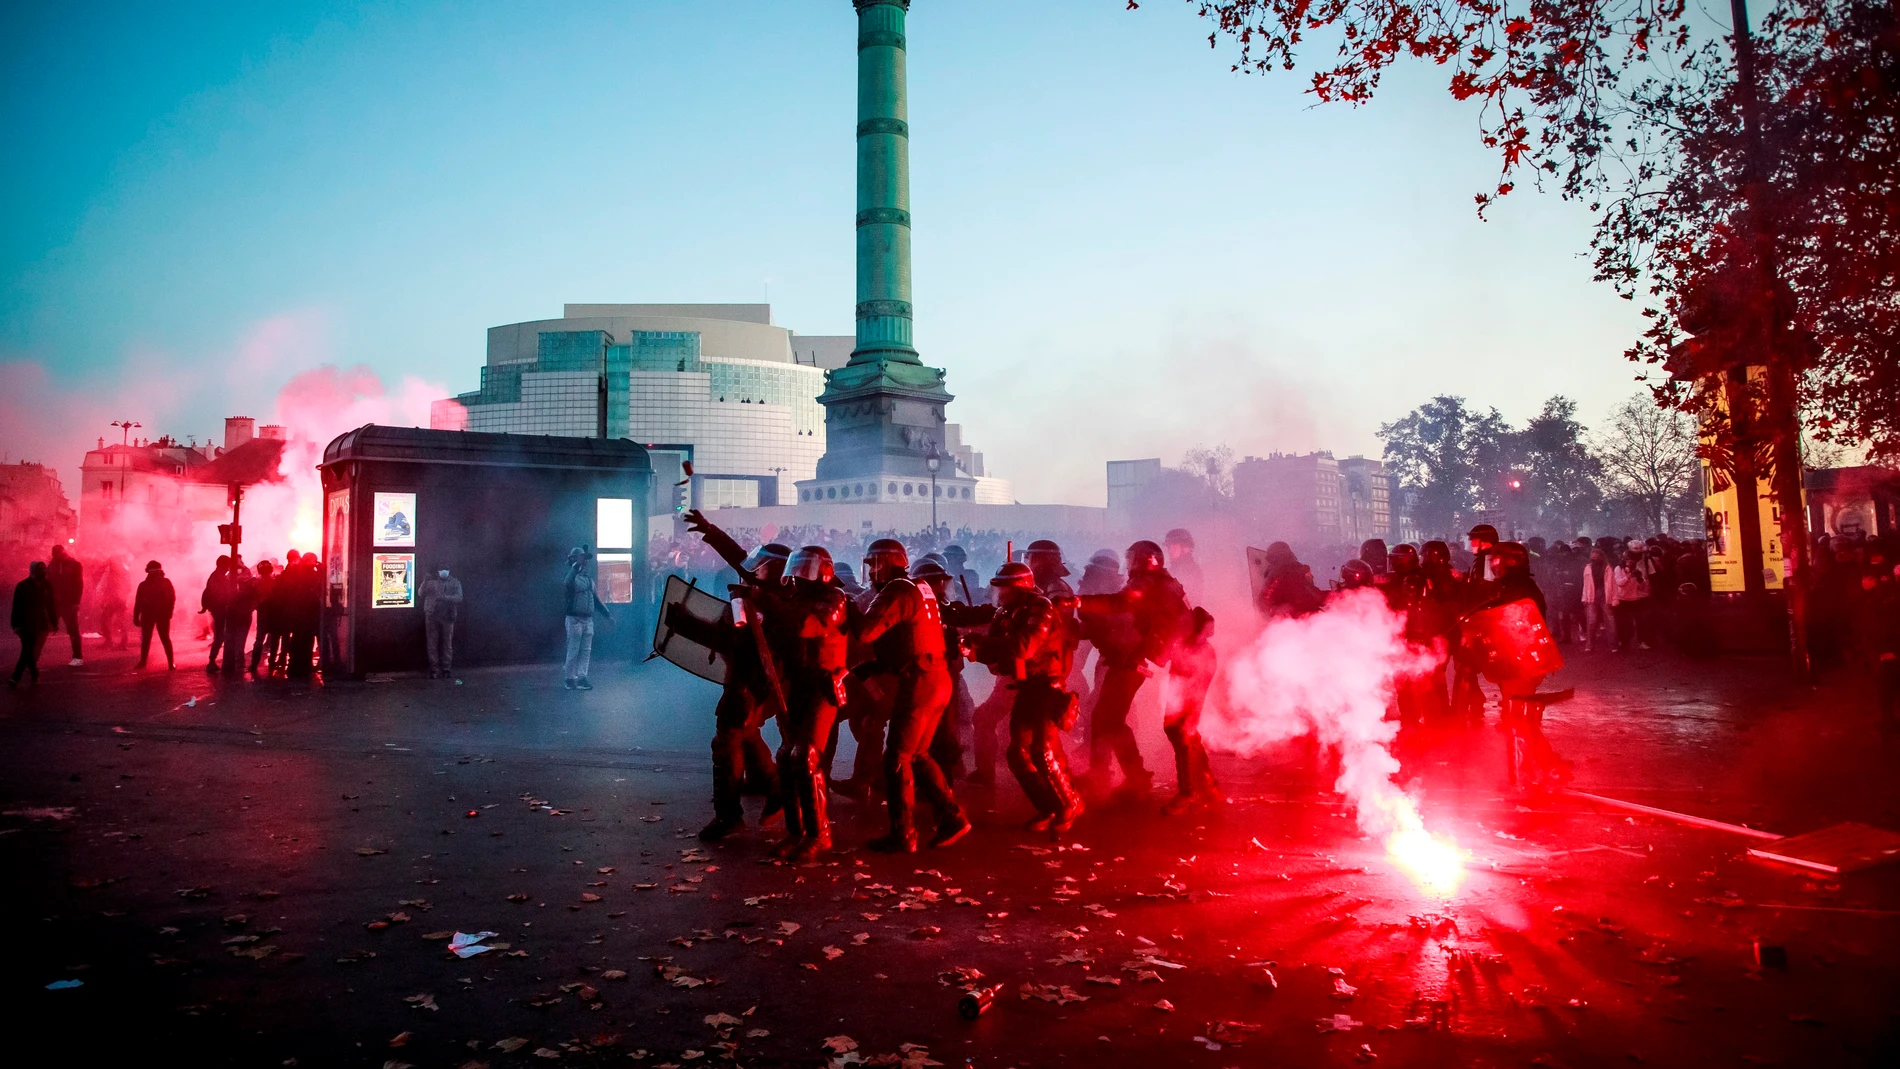 Agentes antidisturbios se enfrentan a manifestantes en París